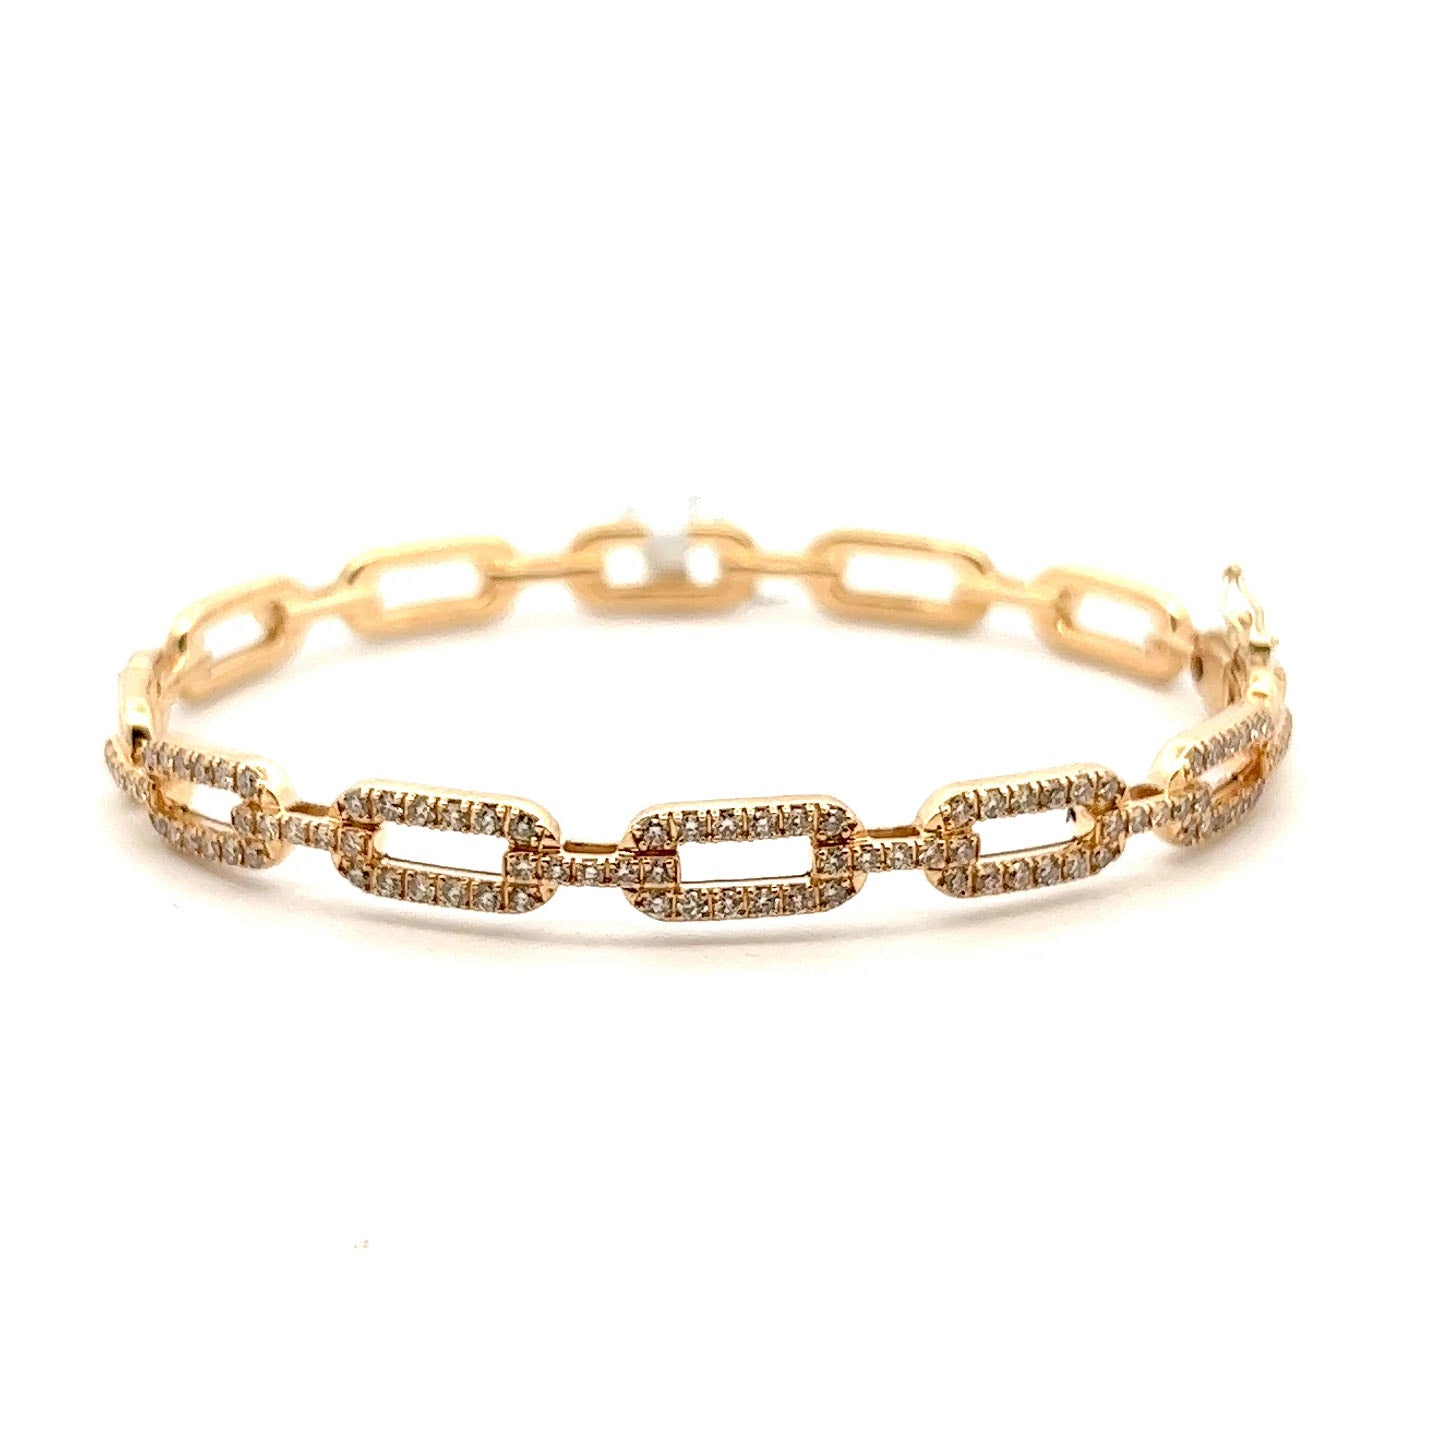 18k White Gold Diamond Bangle Bracelet - 1ct tw